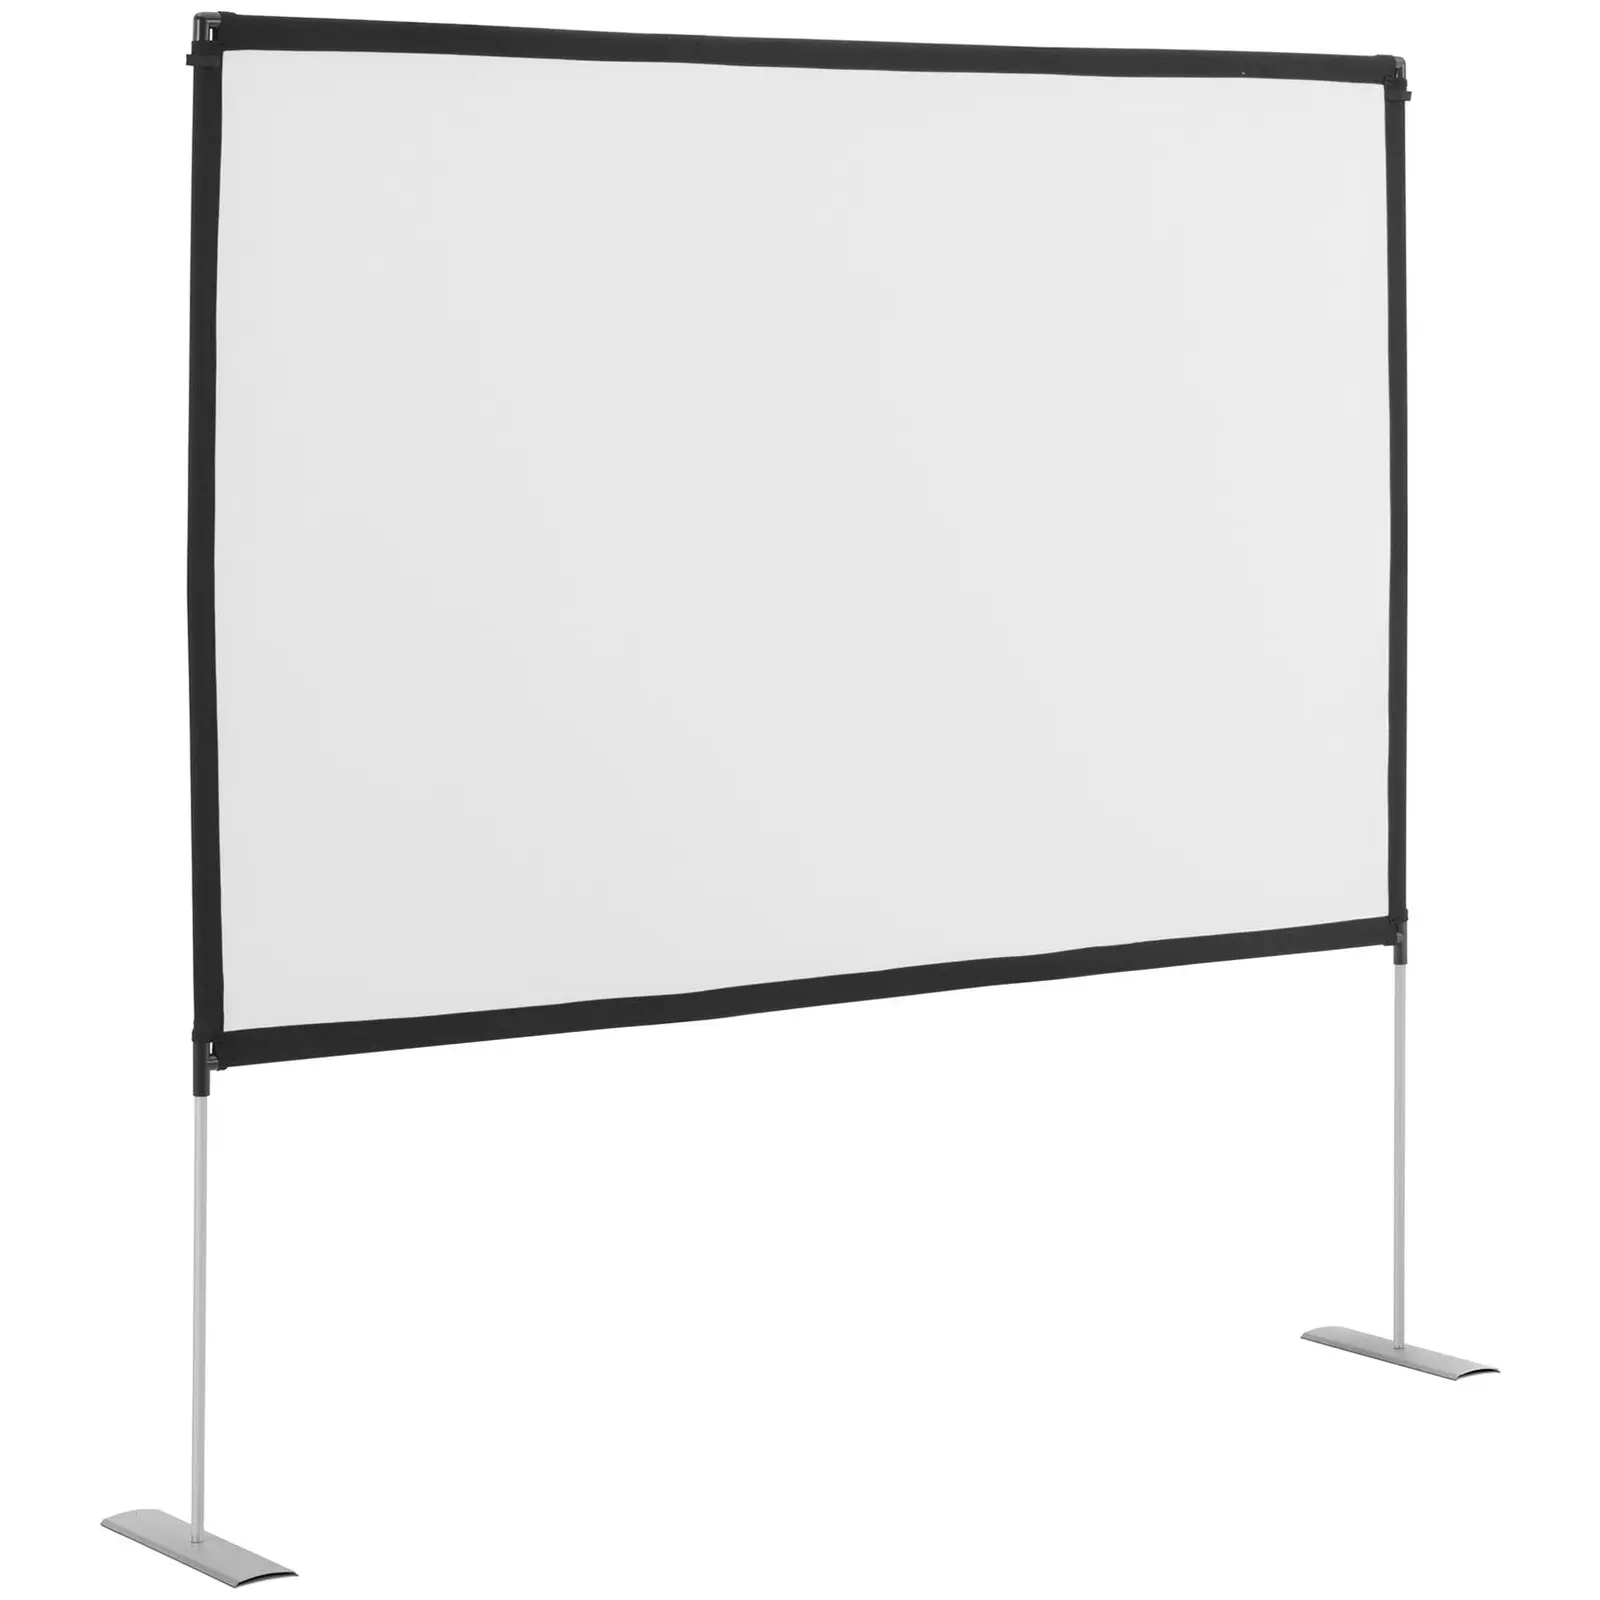 Projector Screen - 228 x 133 cm - 16:9 - 100" - aluminium frame